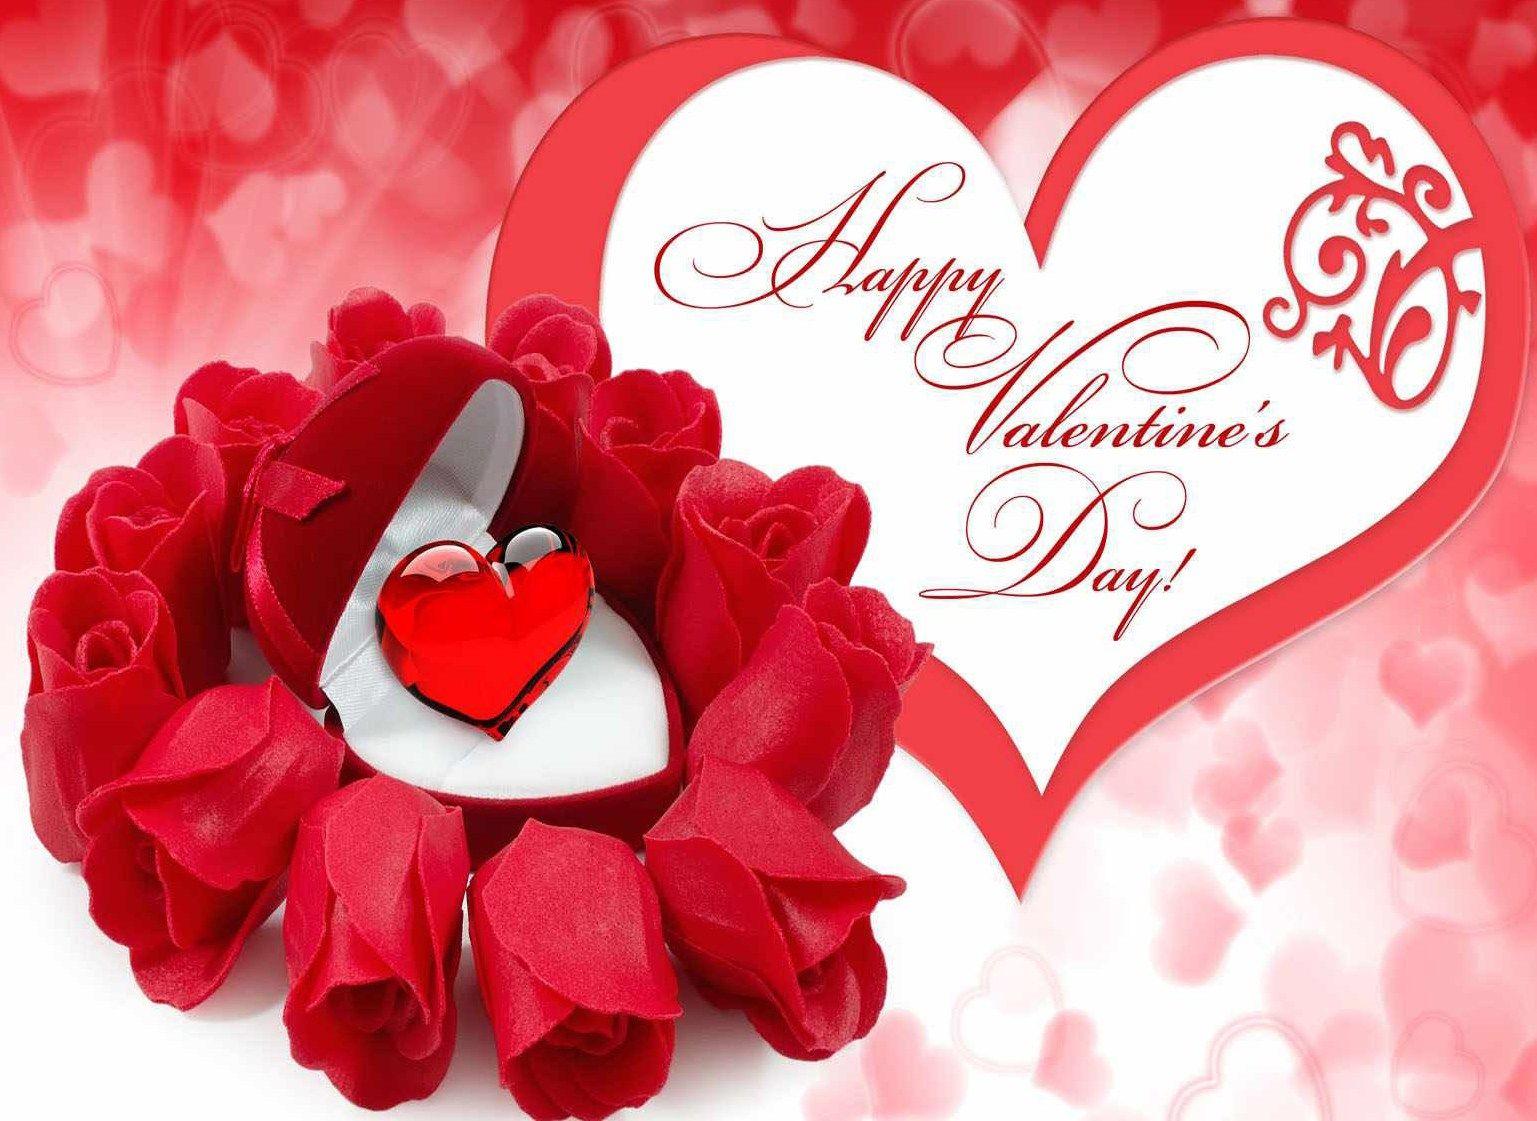 Happy valentine's day special /happy